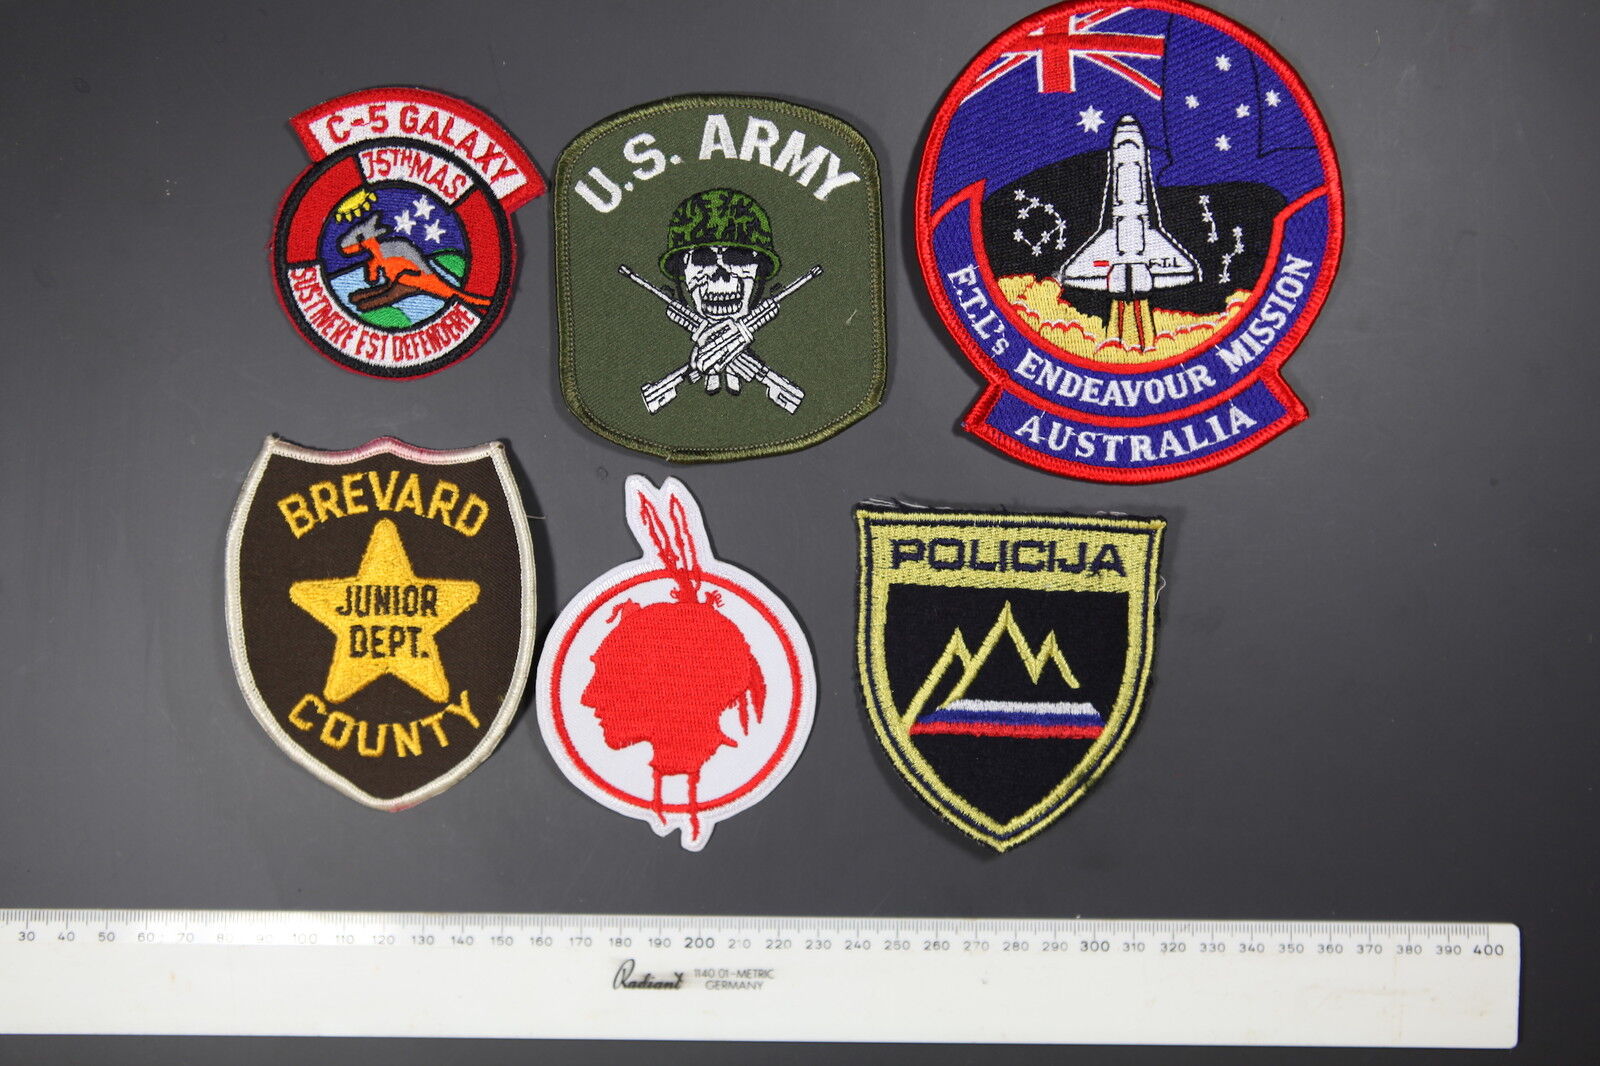 C-5 Galaxy 75th MAS, U.S Army, Policija, Indian, Brevard County, Patches. Lot 47